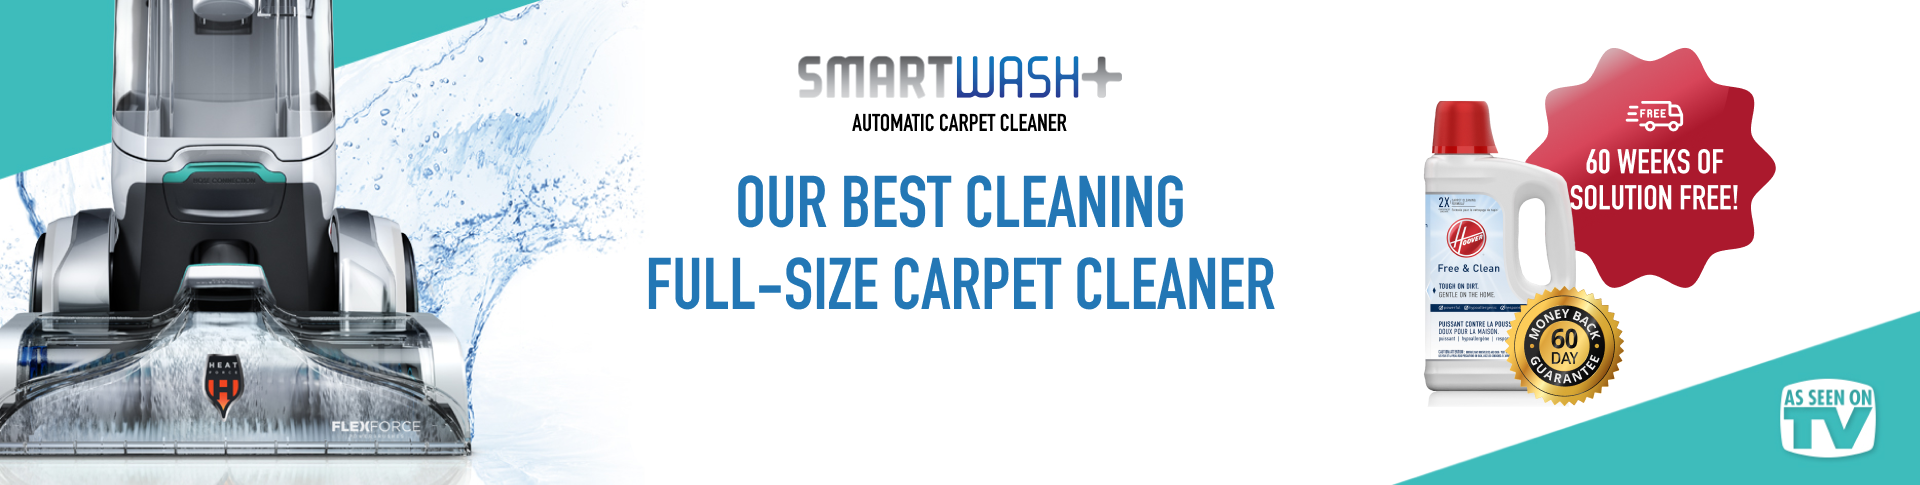 Hoover Smartwash+ Automatic Carpet Cleaner